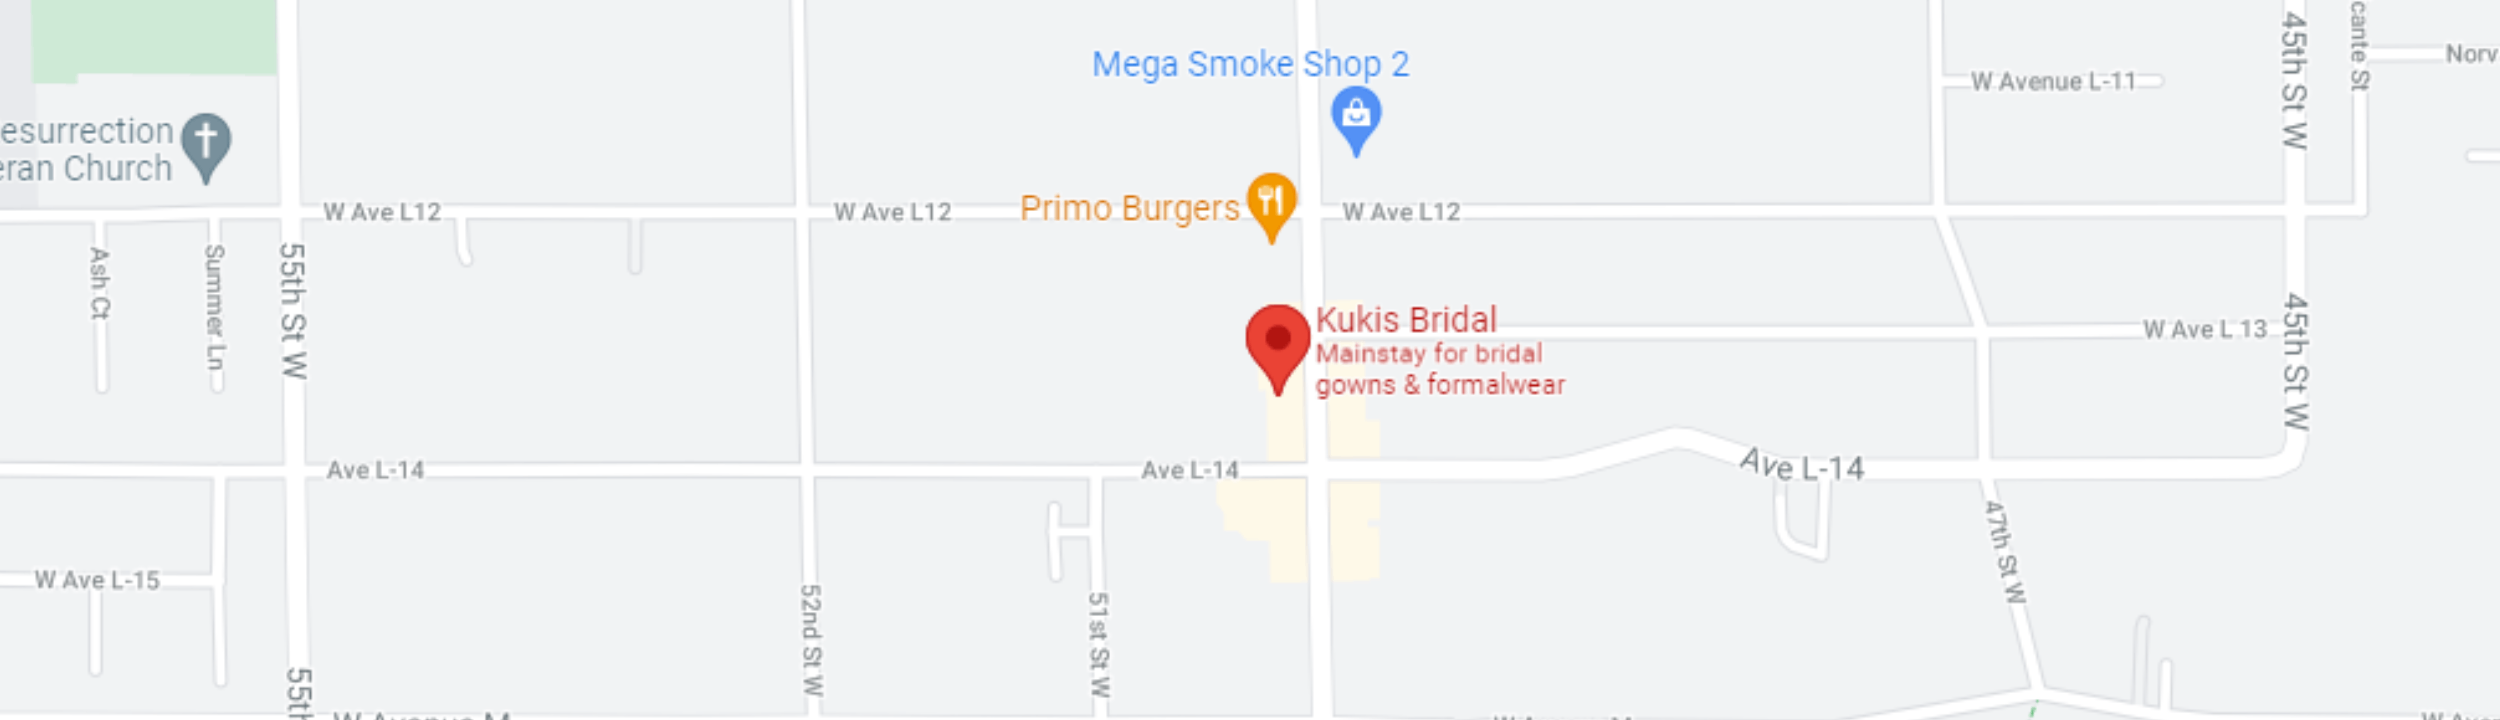 Kuki's Bridal Google Maps Desktop Image